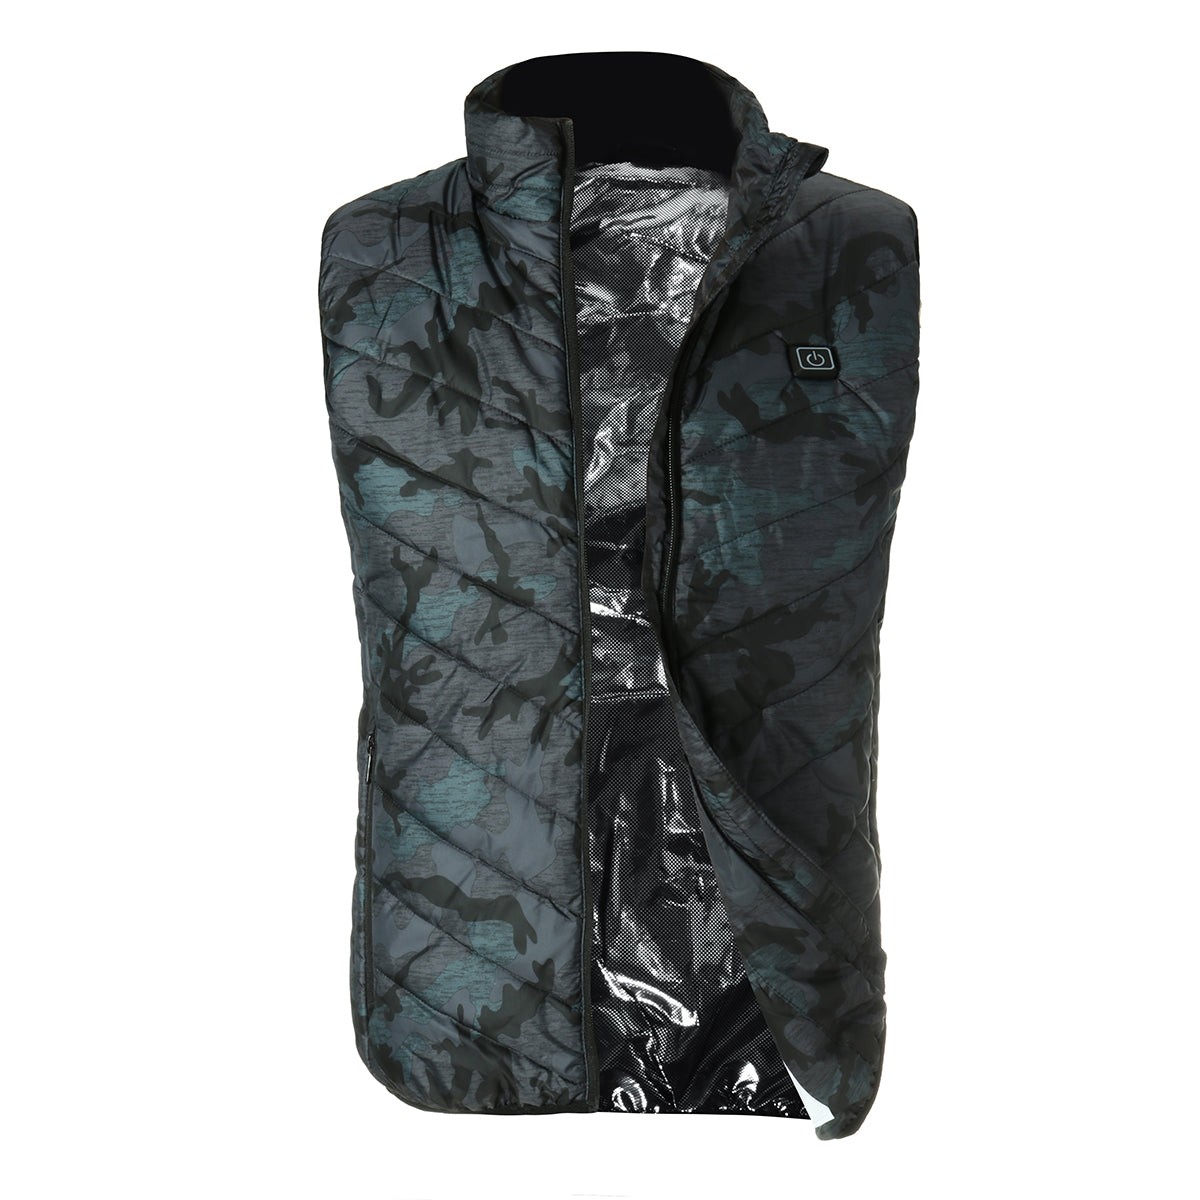 Dark Slate Gray Electric Heated USB Jacket Waistcoat Cloth Thermal Warm Pad Warmer Winter Washable